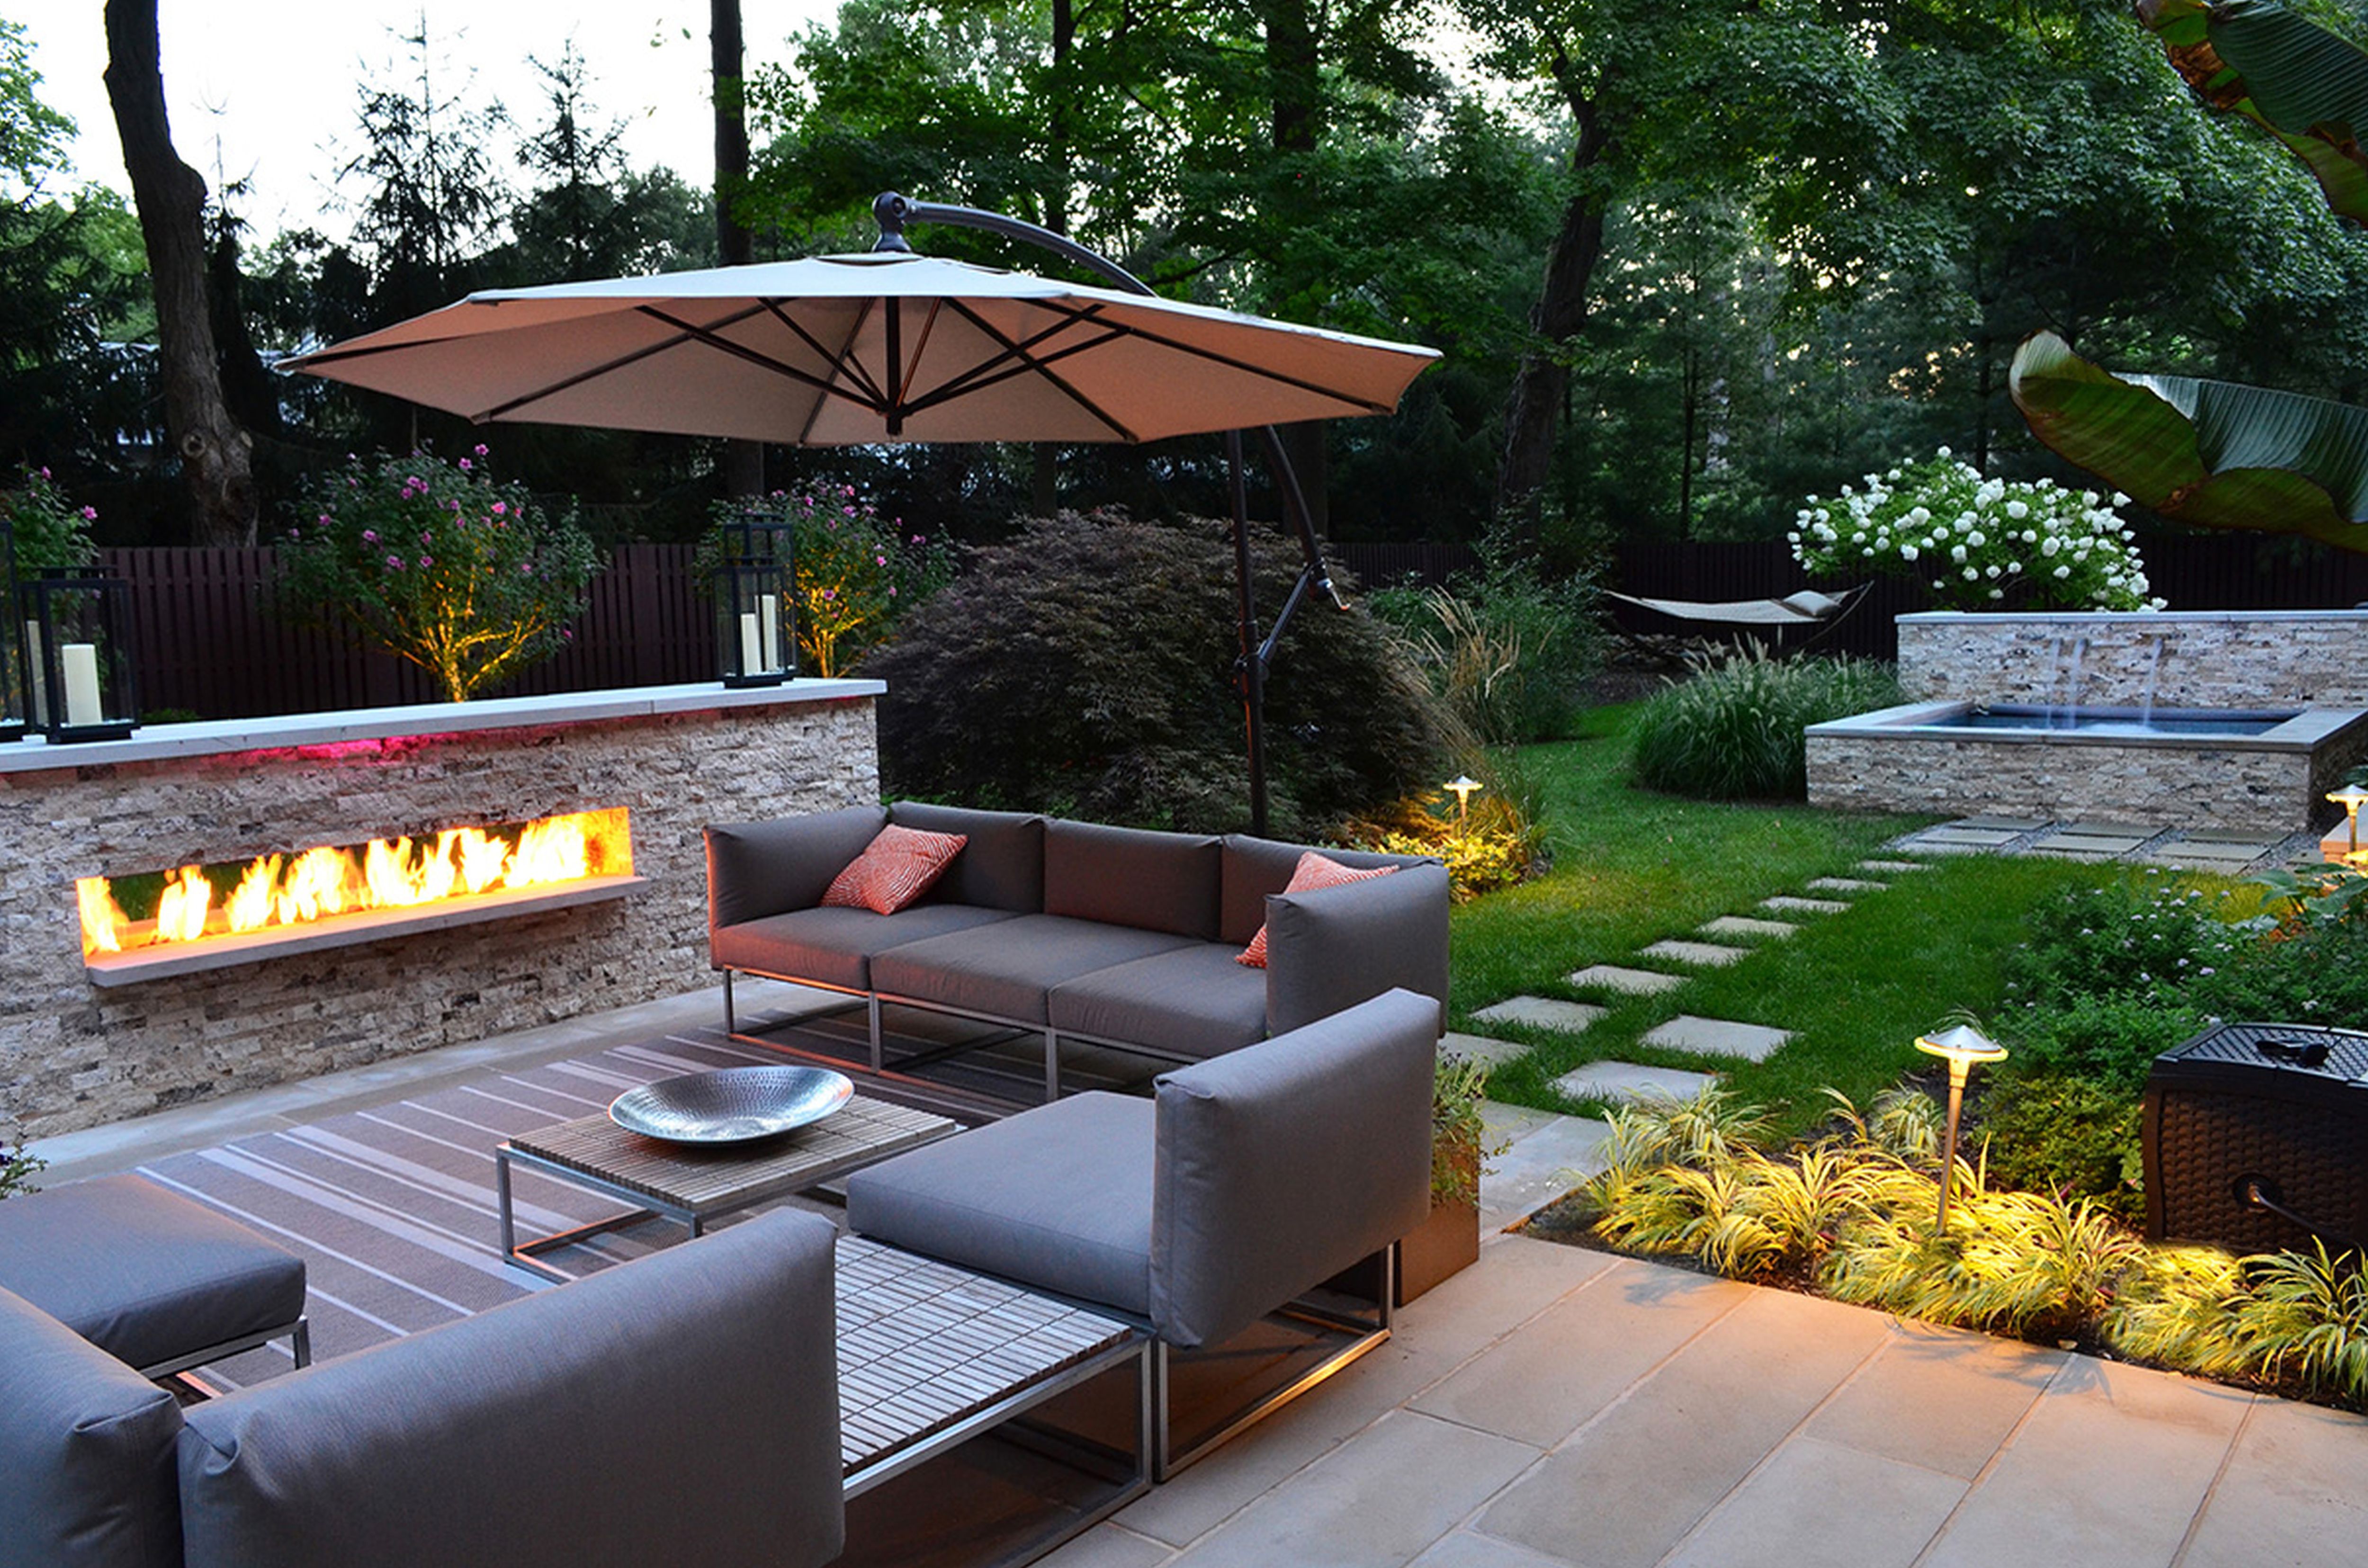 cool back yard patio with fire pit ideas kb jpeg x has back garden ideas QNPMFIF